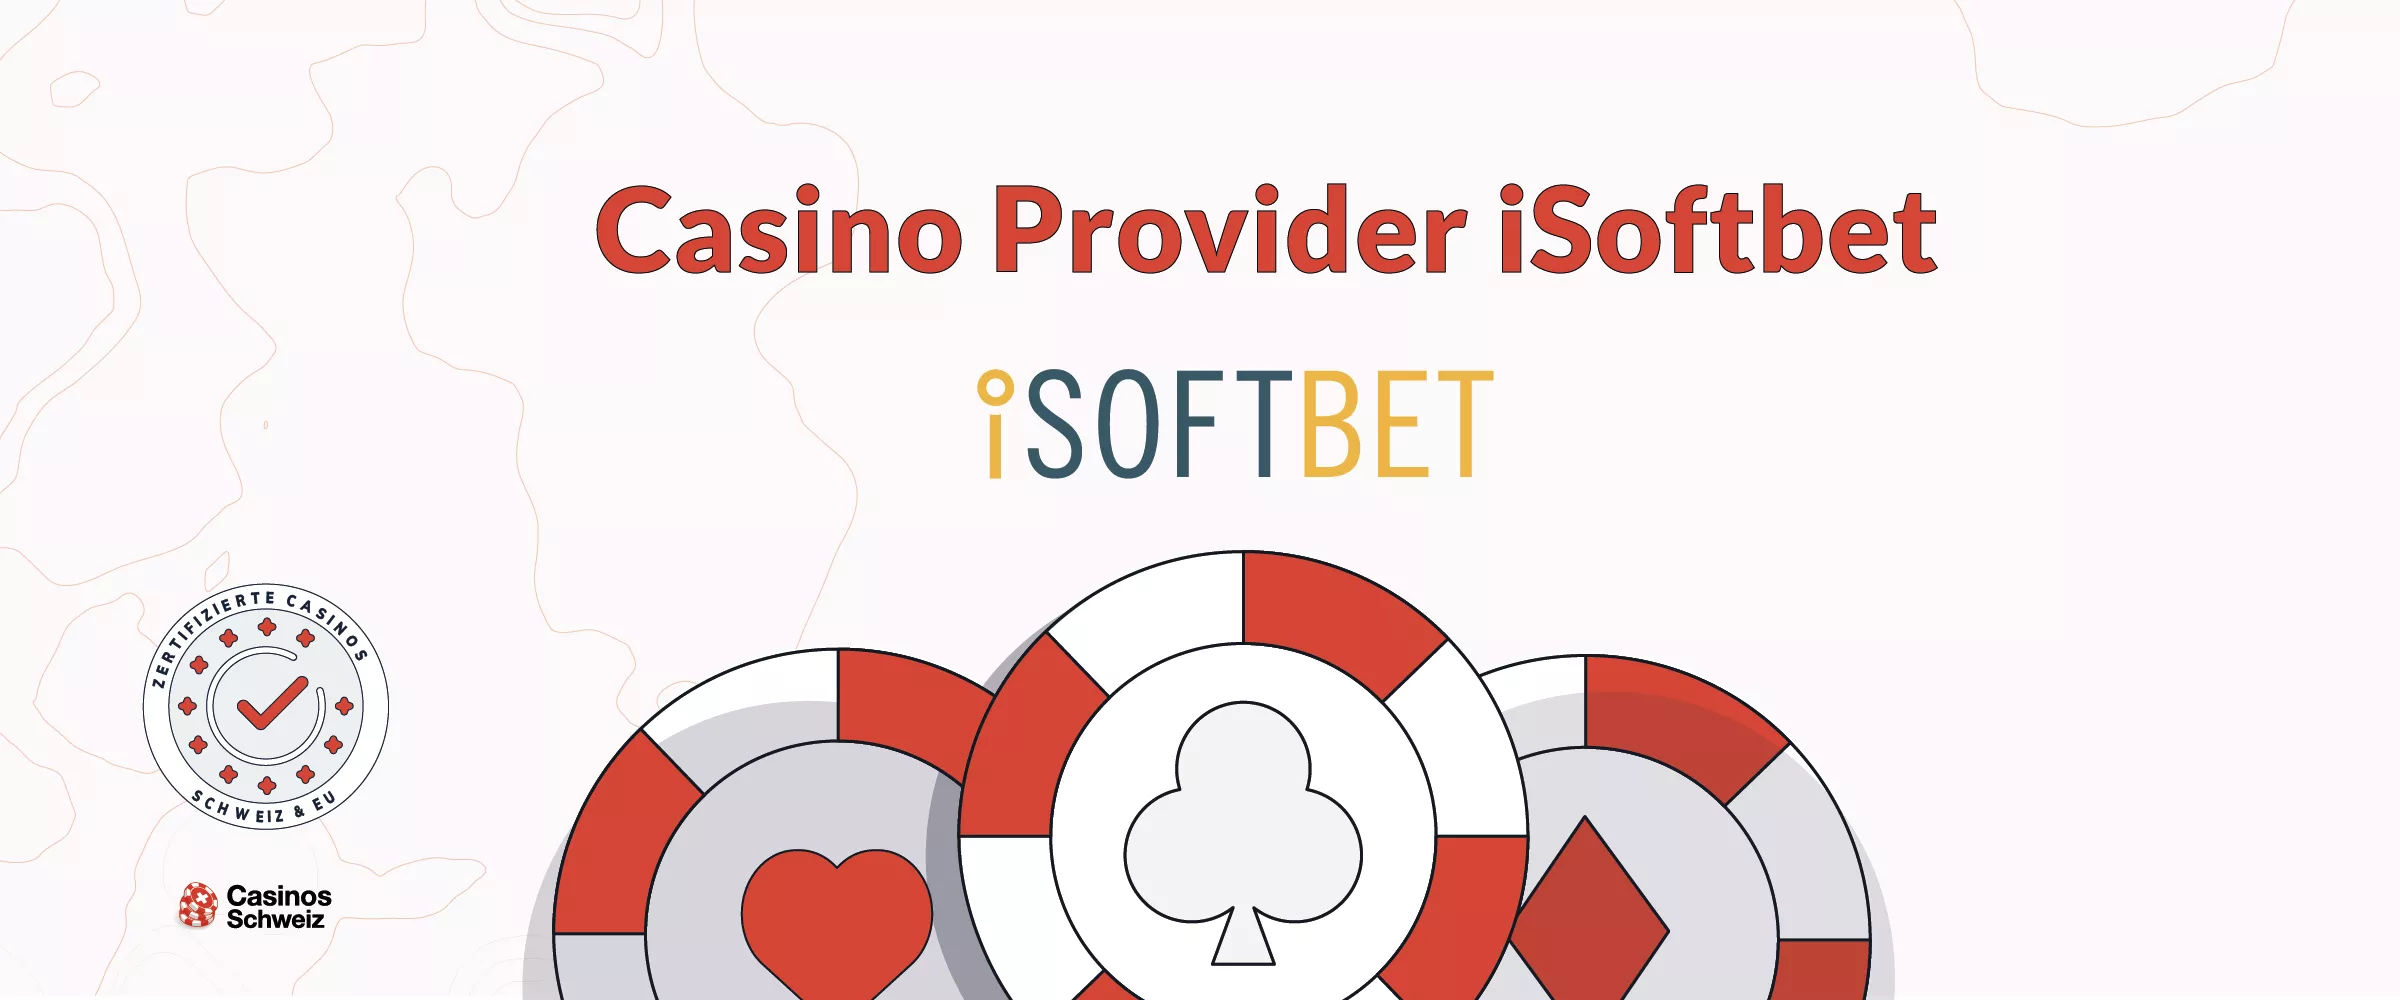 Casino Provider iSoftbet